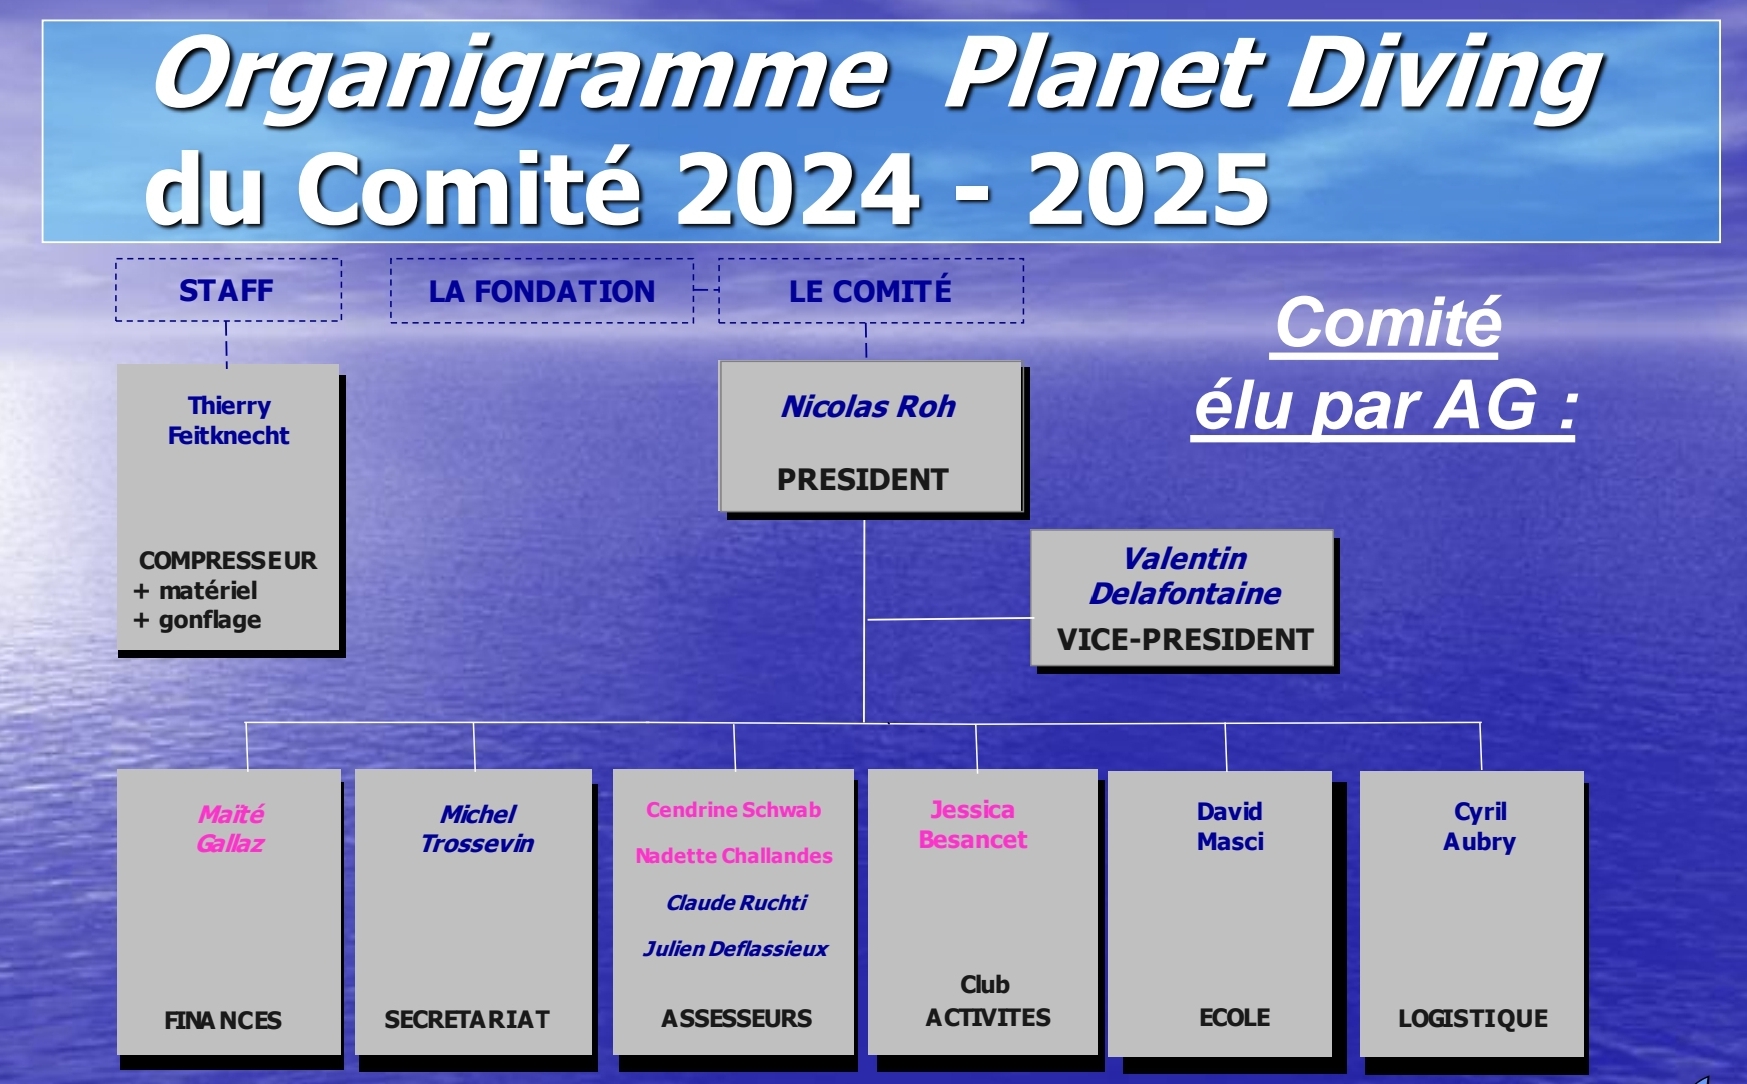 Comité-PlanetDiving-Organigrame-2024-2025